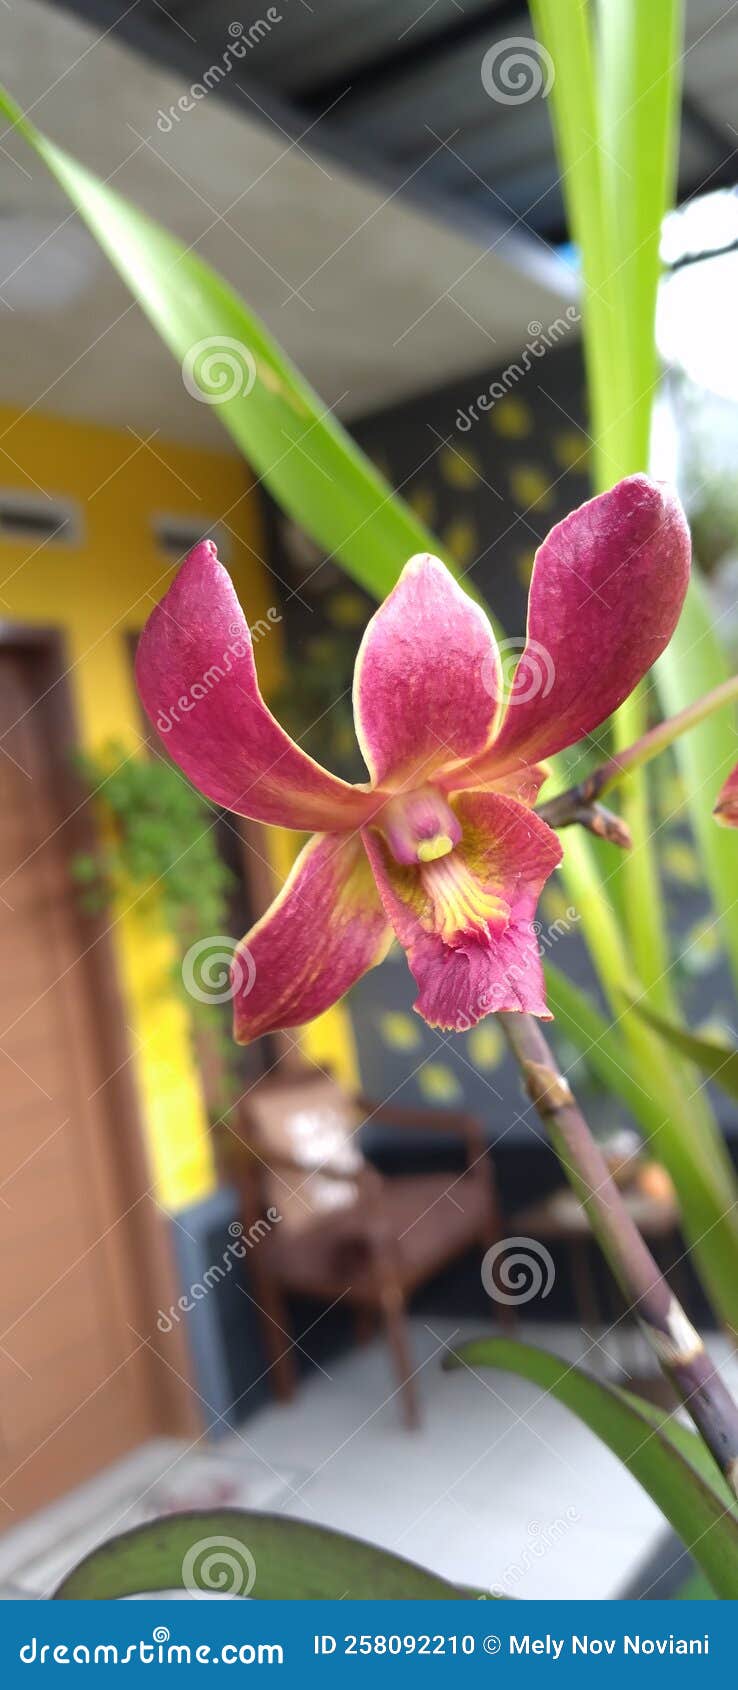 a dendrobium orchid